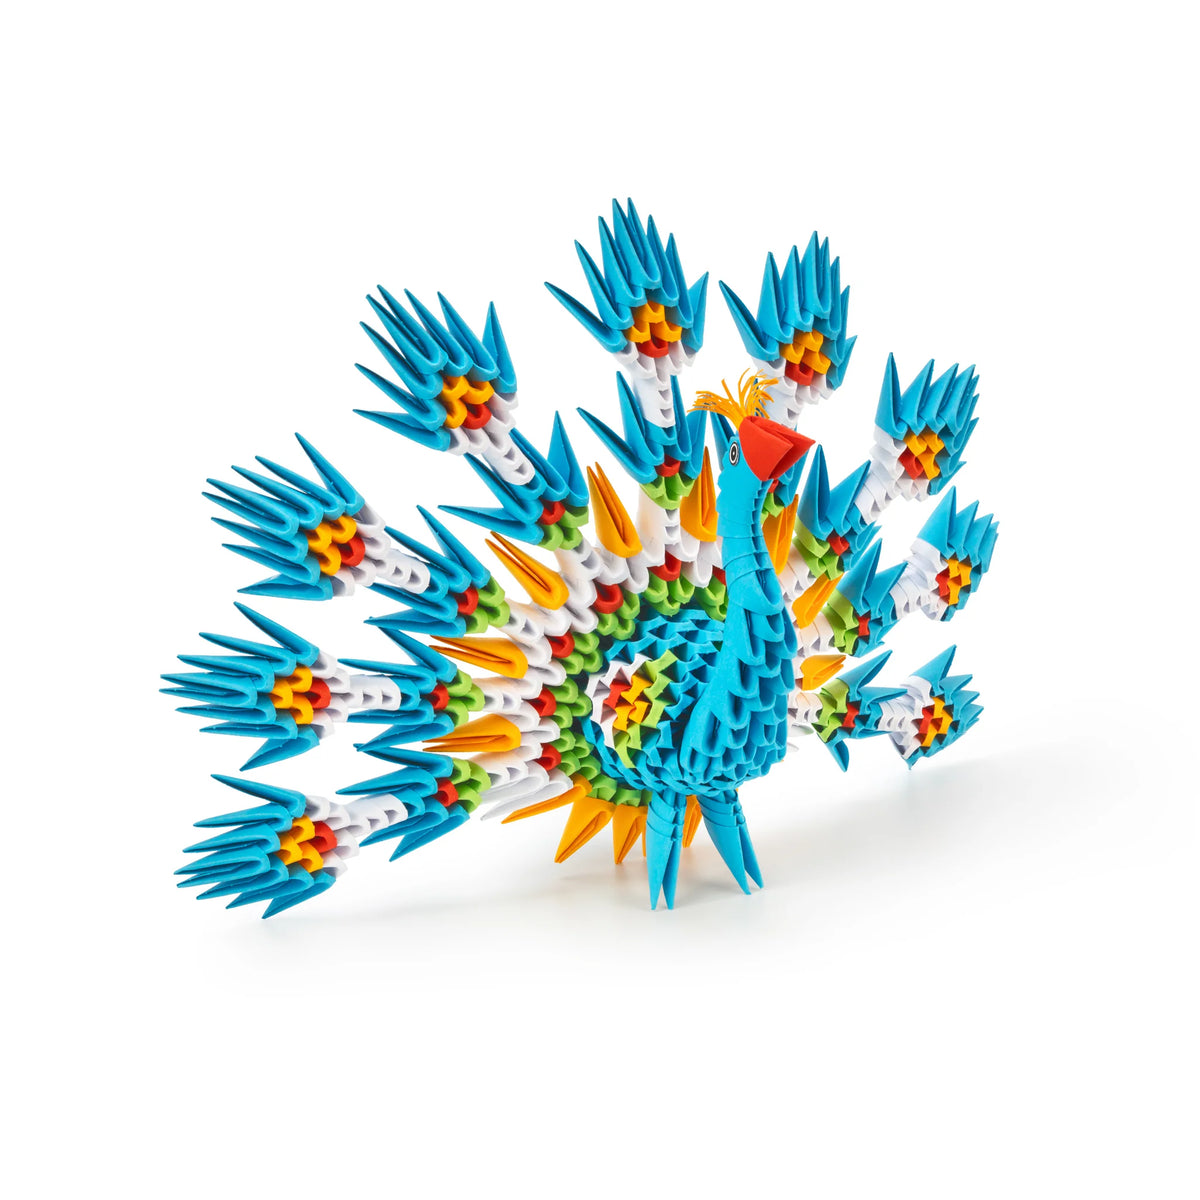 3D Peacock in origami paper